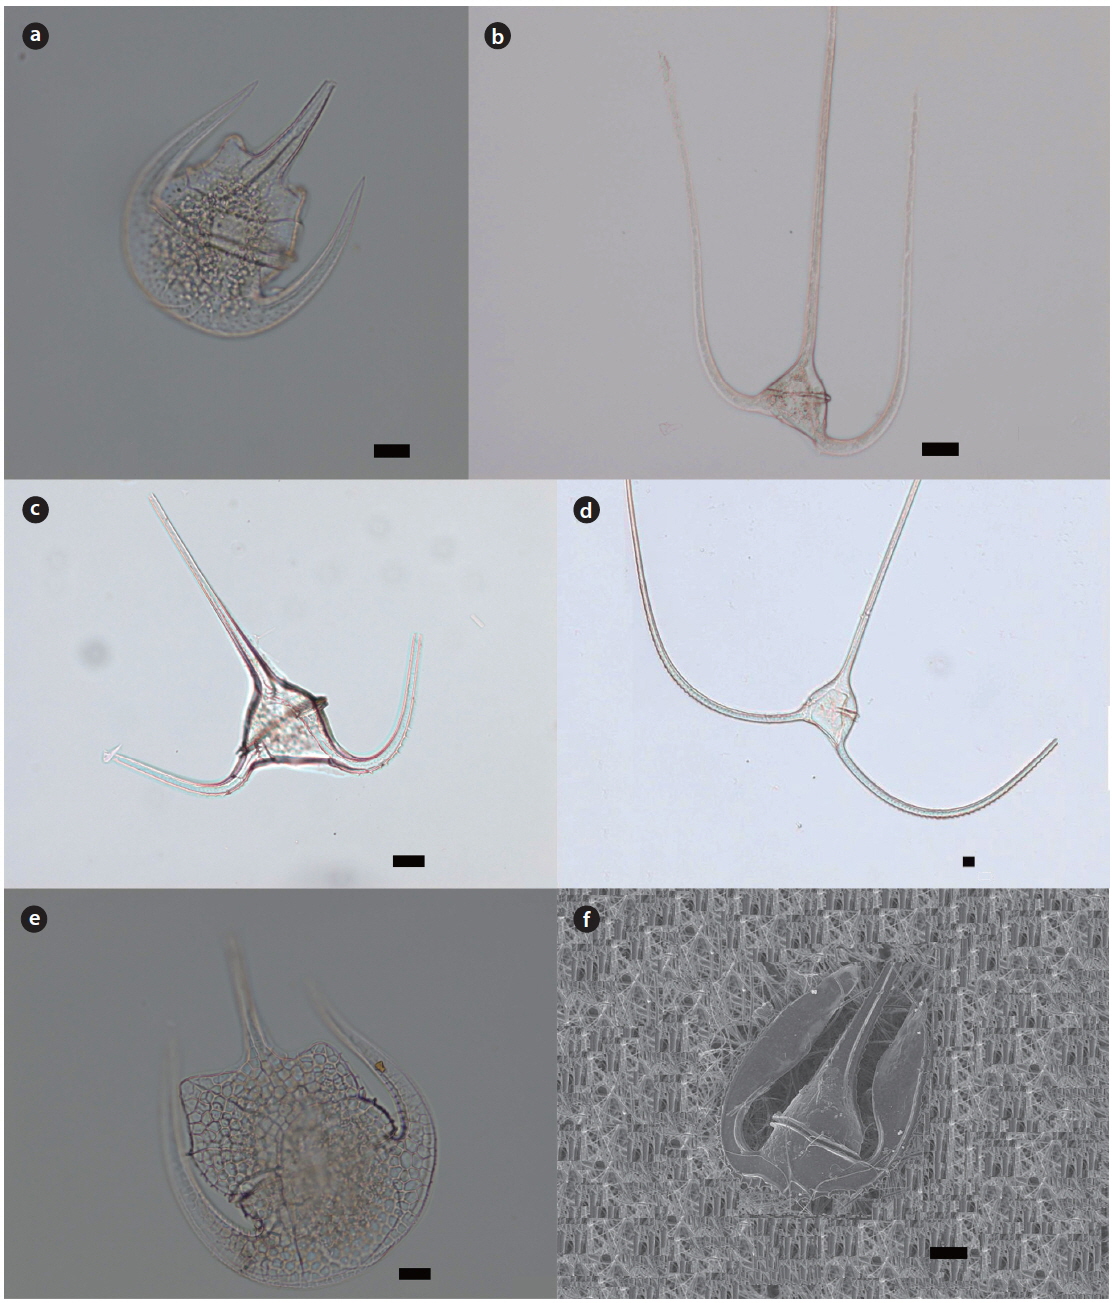 Light micrographs and scanning electron micrograph (SEM) of the genus Tripos. (a) T. limulus (VV), (b) T. longissimus (DV), (c) T. macroceros var. gallicus (DV), (d) T. massiliensis var. massiliensis (DV), (e) T. paradoxides (VV), (f ) T. lamellicornis (SEM, DV). Scale bars, 20 μm; DV, dorsal view; VV, ventral view.